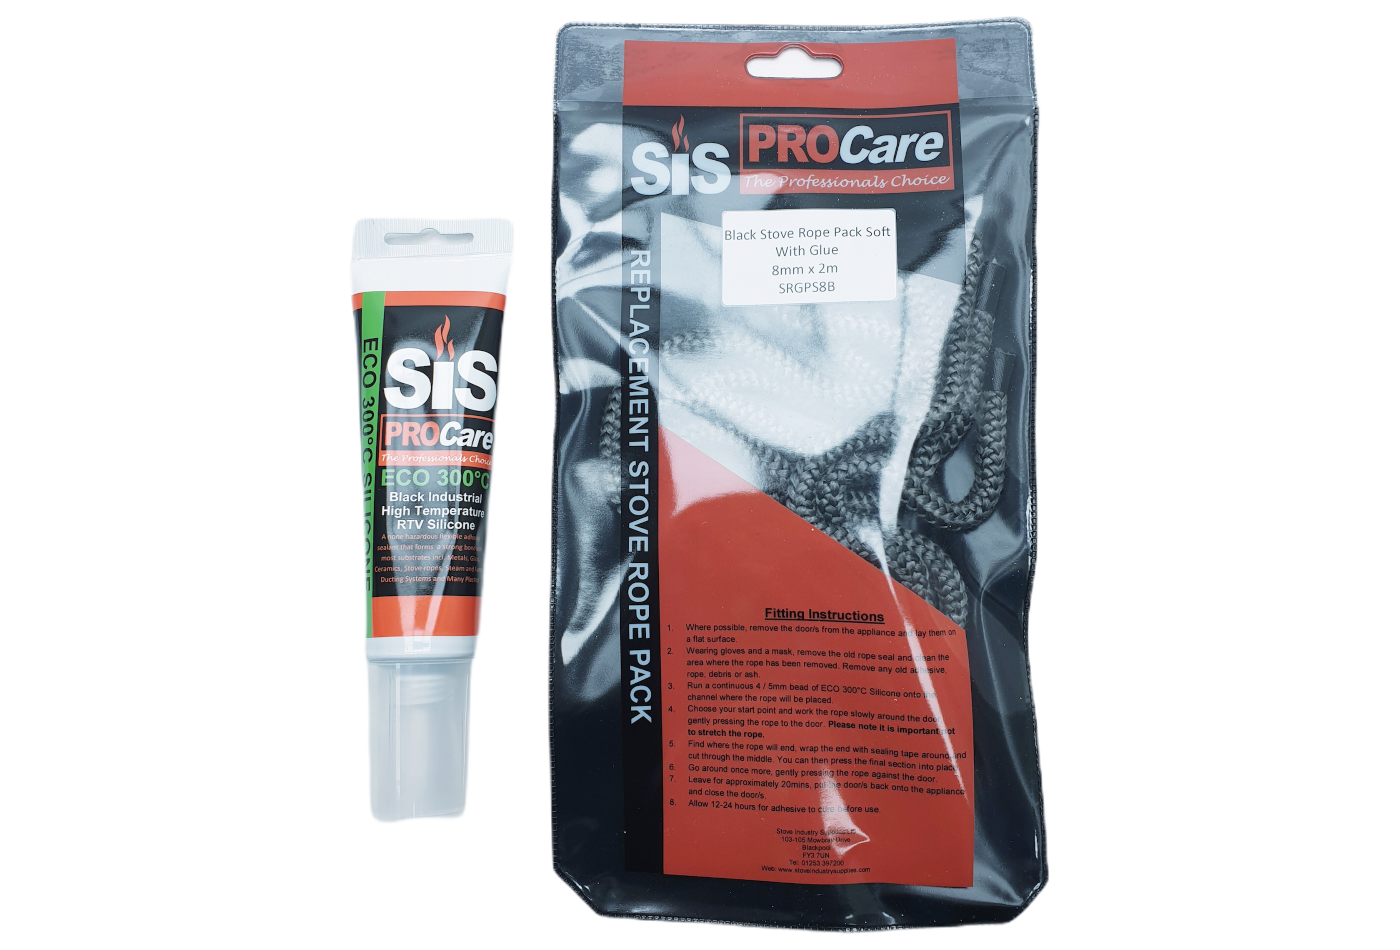 SiS Procare Black 8 milimetre x 2 metre Soft Stove Rope & 80 millilitre Rope Glue Pack - product code SRGPS8B